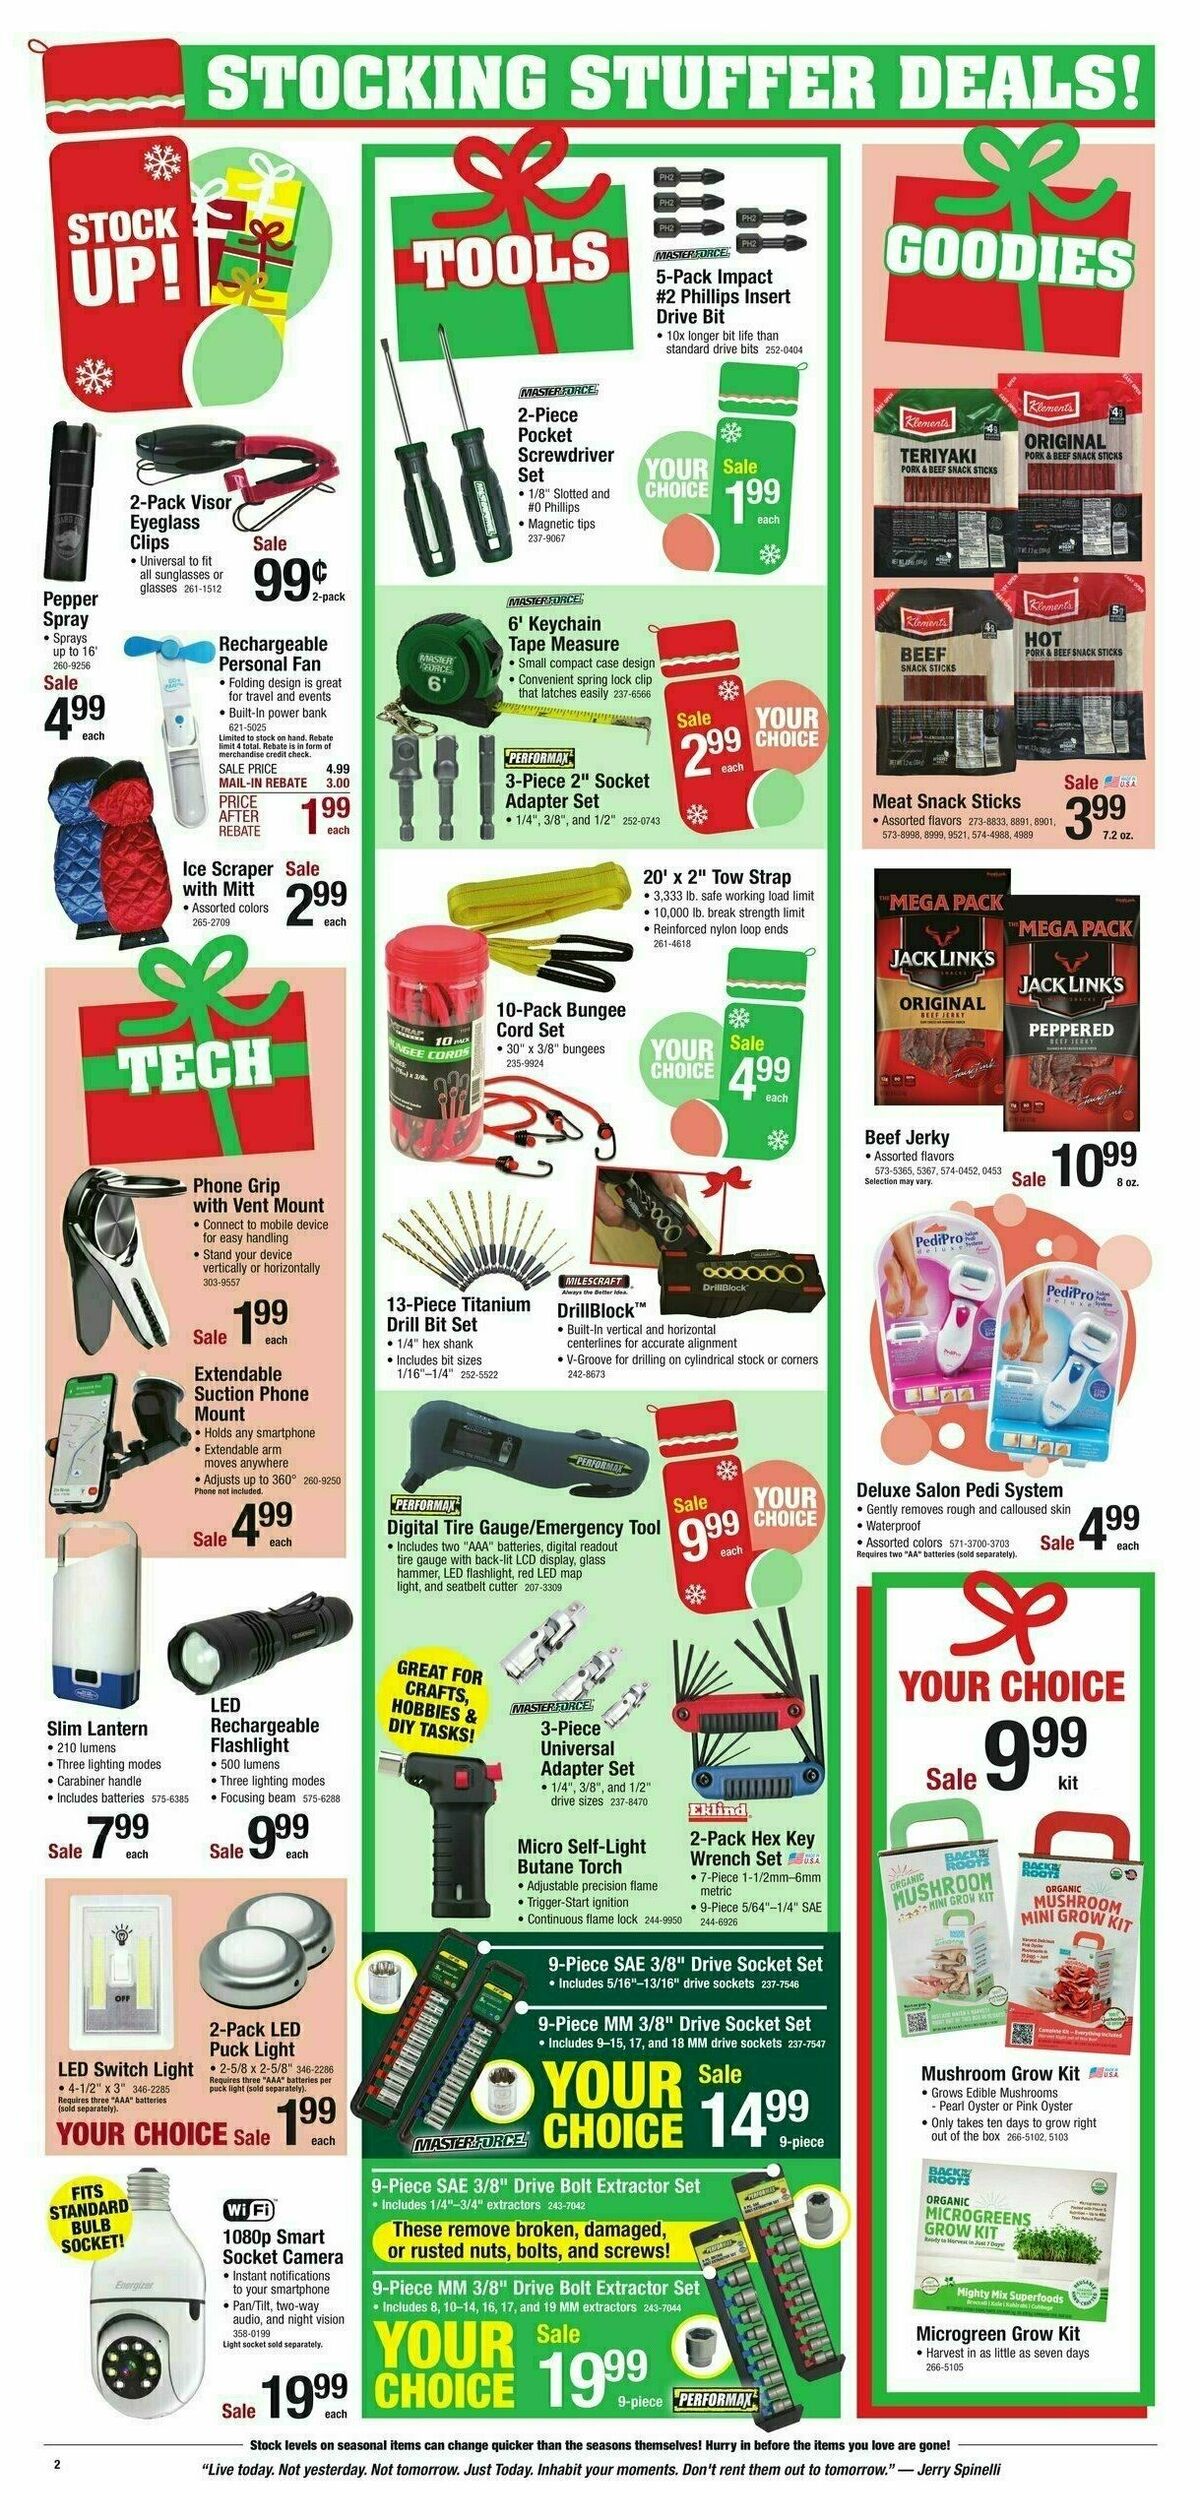 Menards Christmas Gifts Sales Weekly Ad from November 29